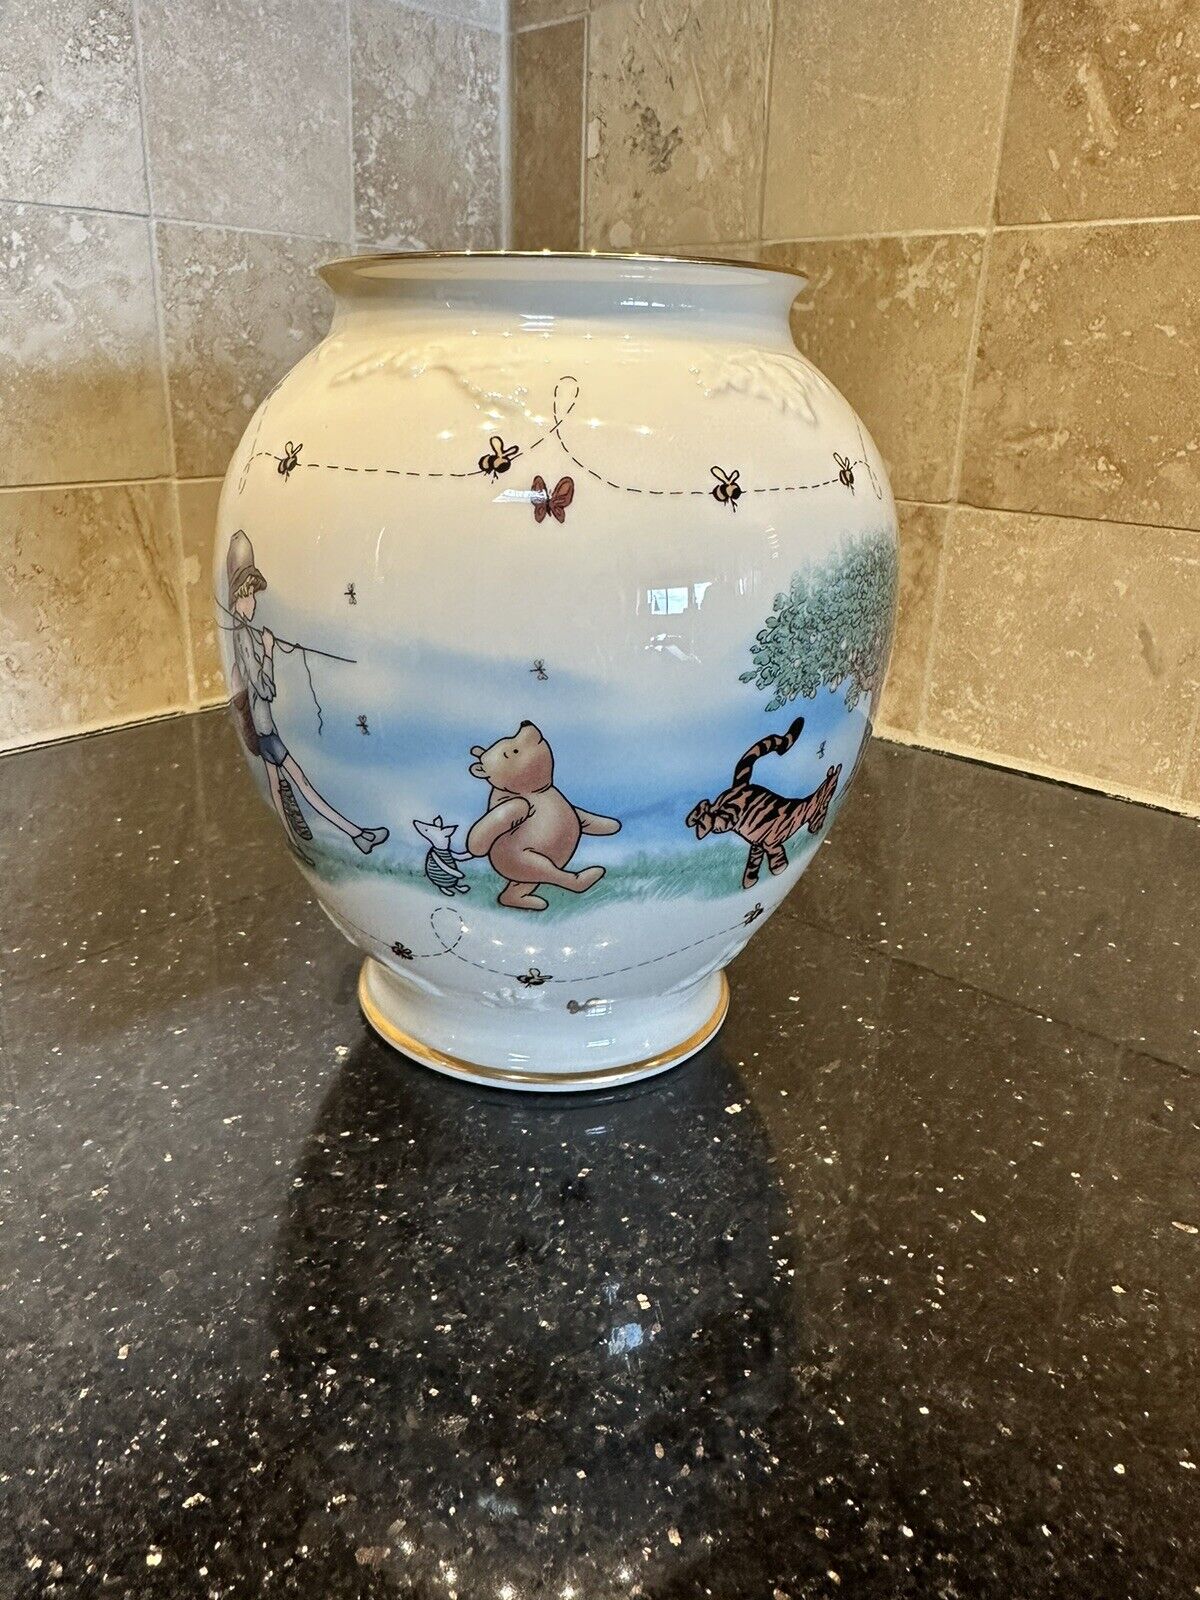 Vintage 1999 Lenox Honey Pot vase With Winnie the Pooh Characters, Disney